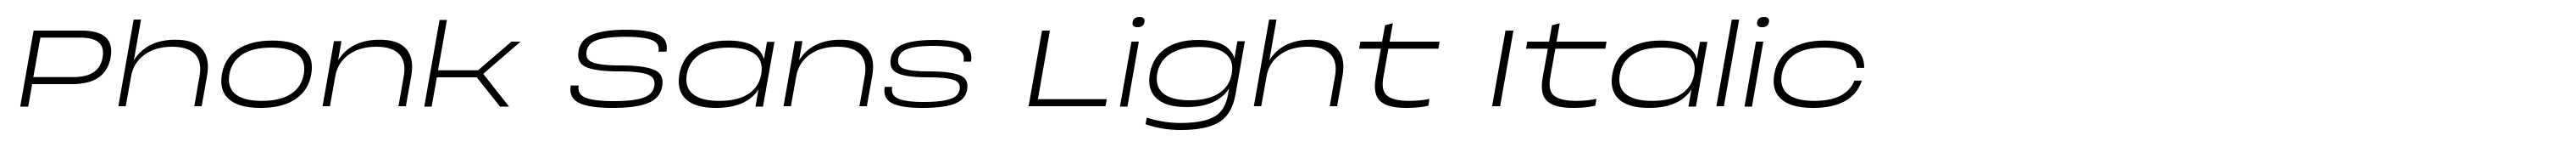 Phonk Sans Light Italic